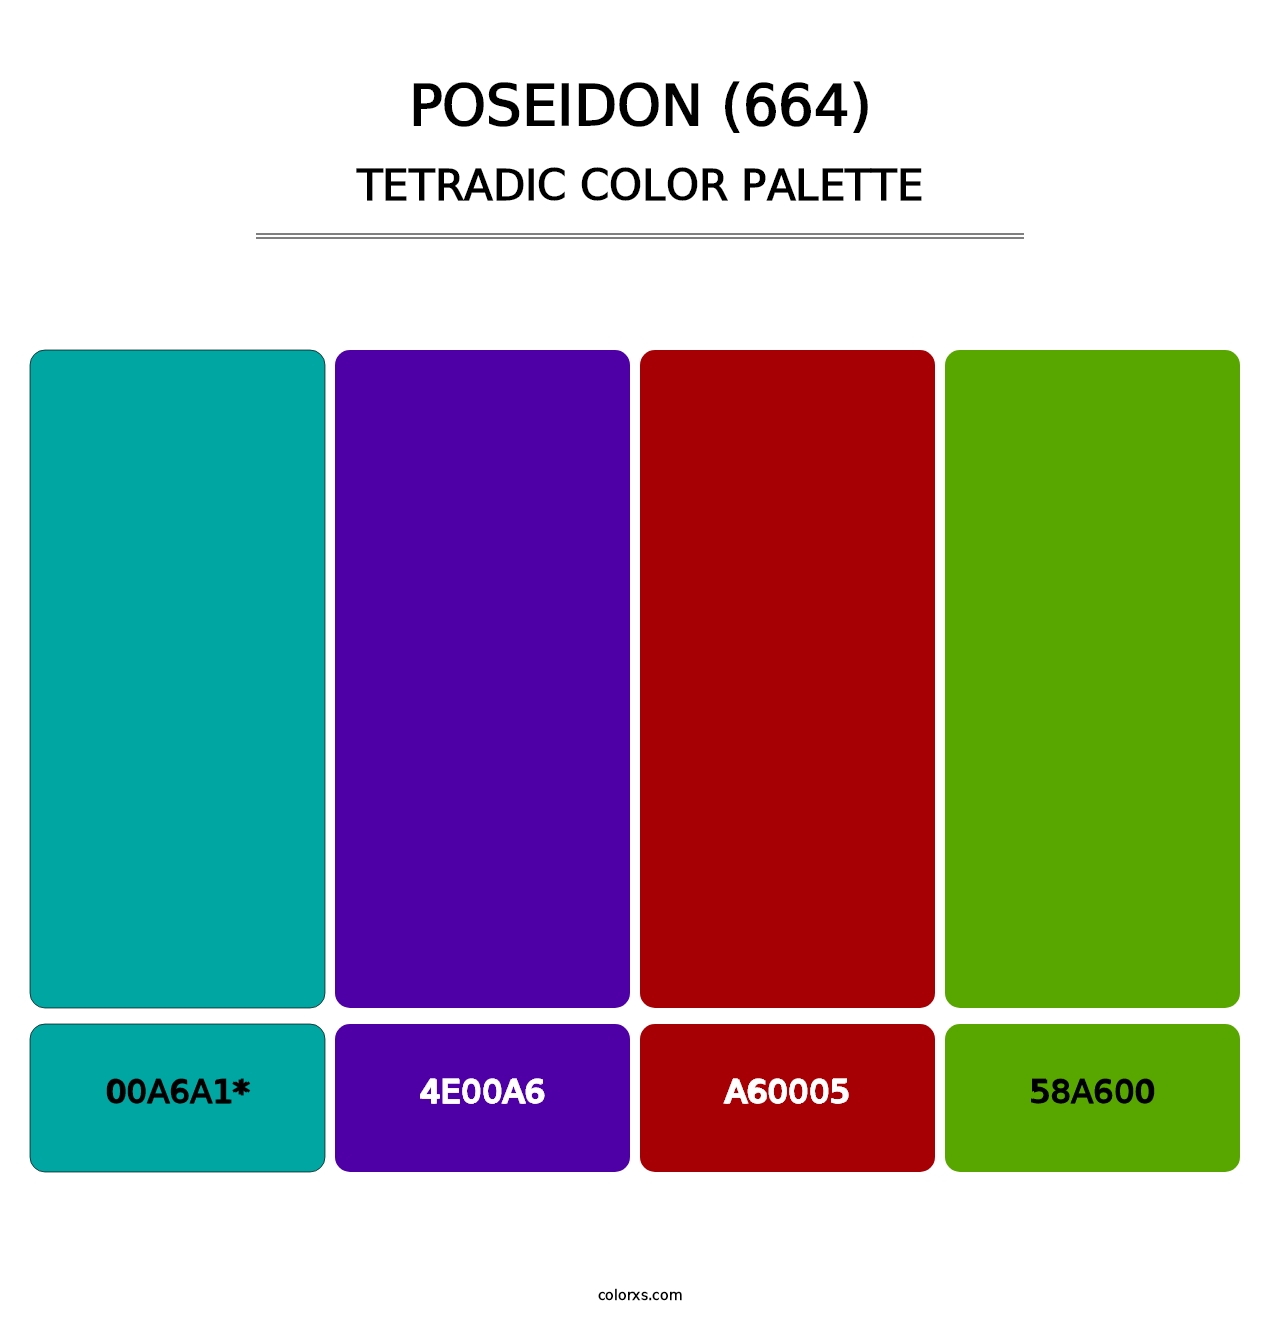 Poseidon (664) - Tetradic Color Palette